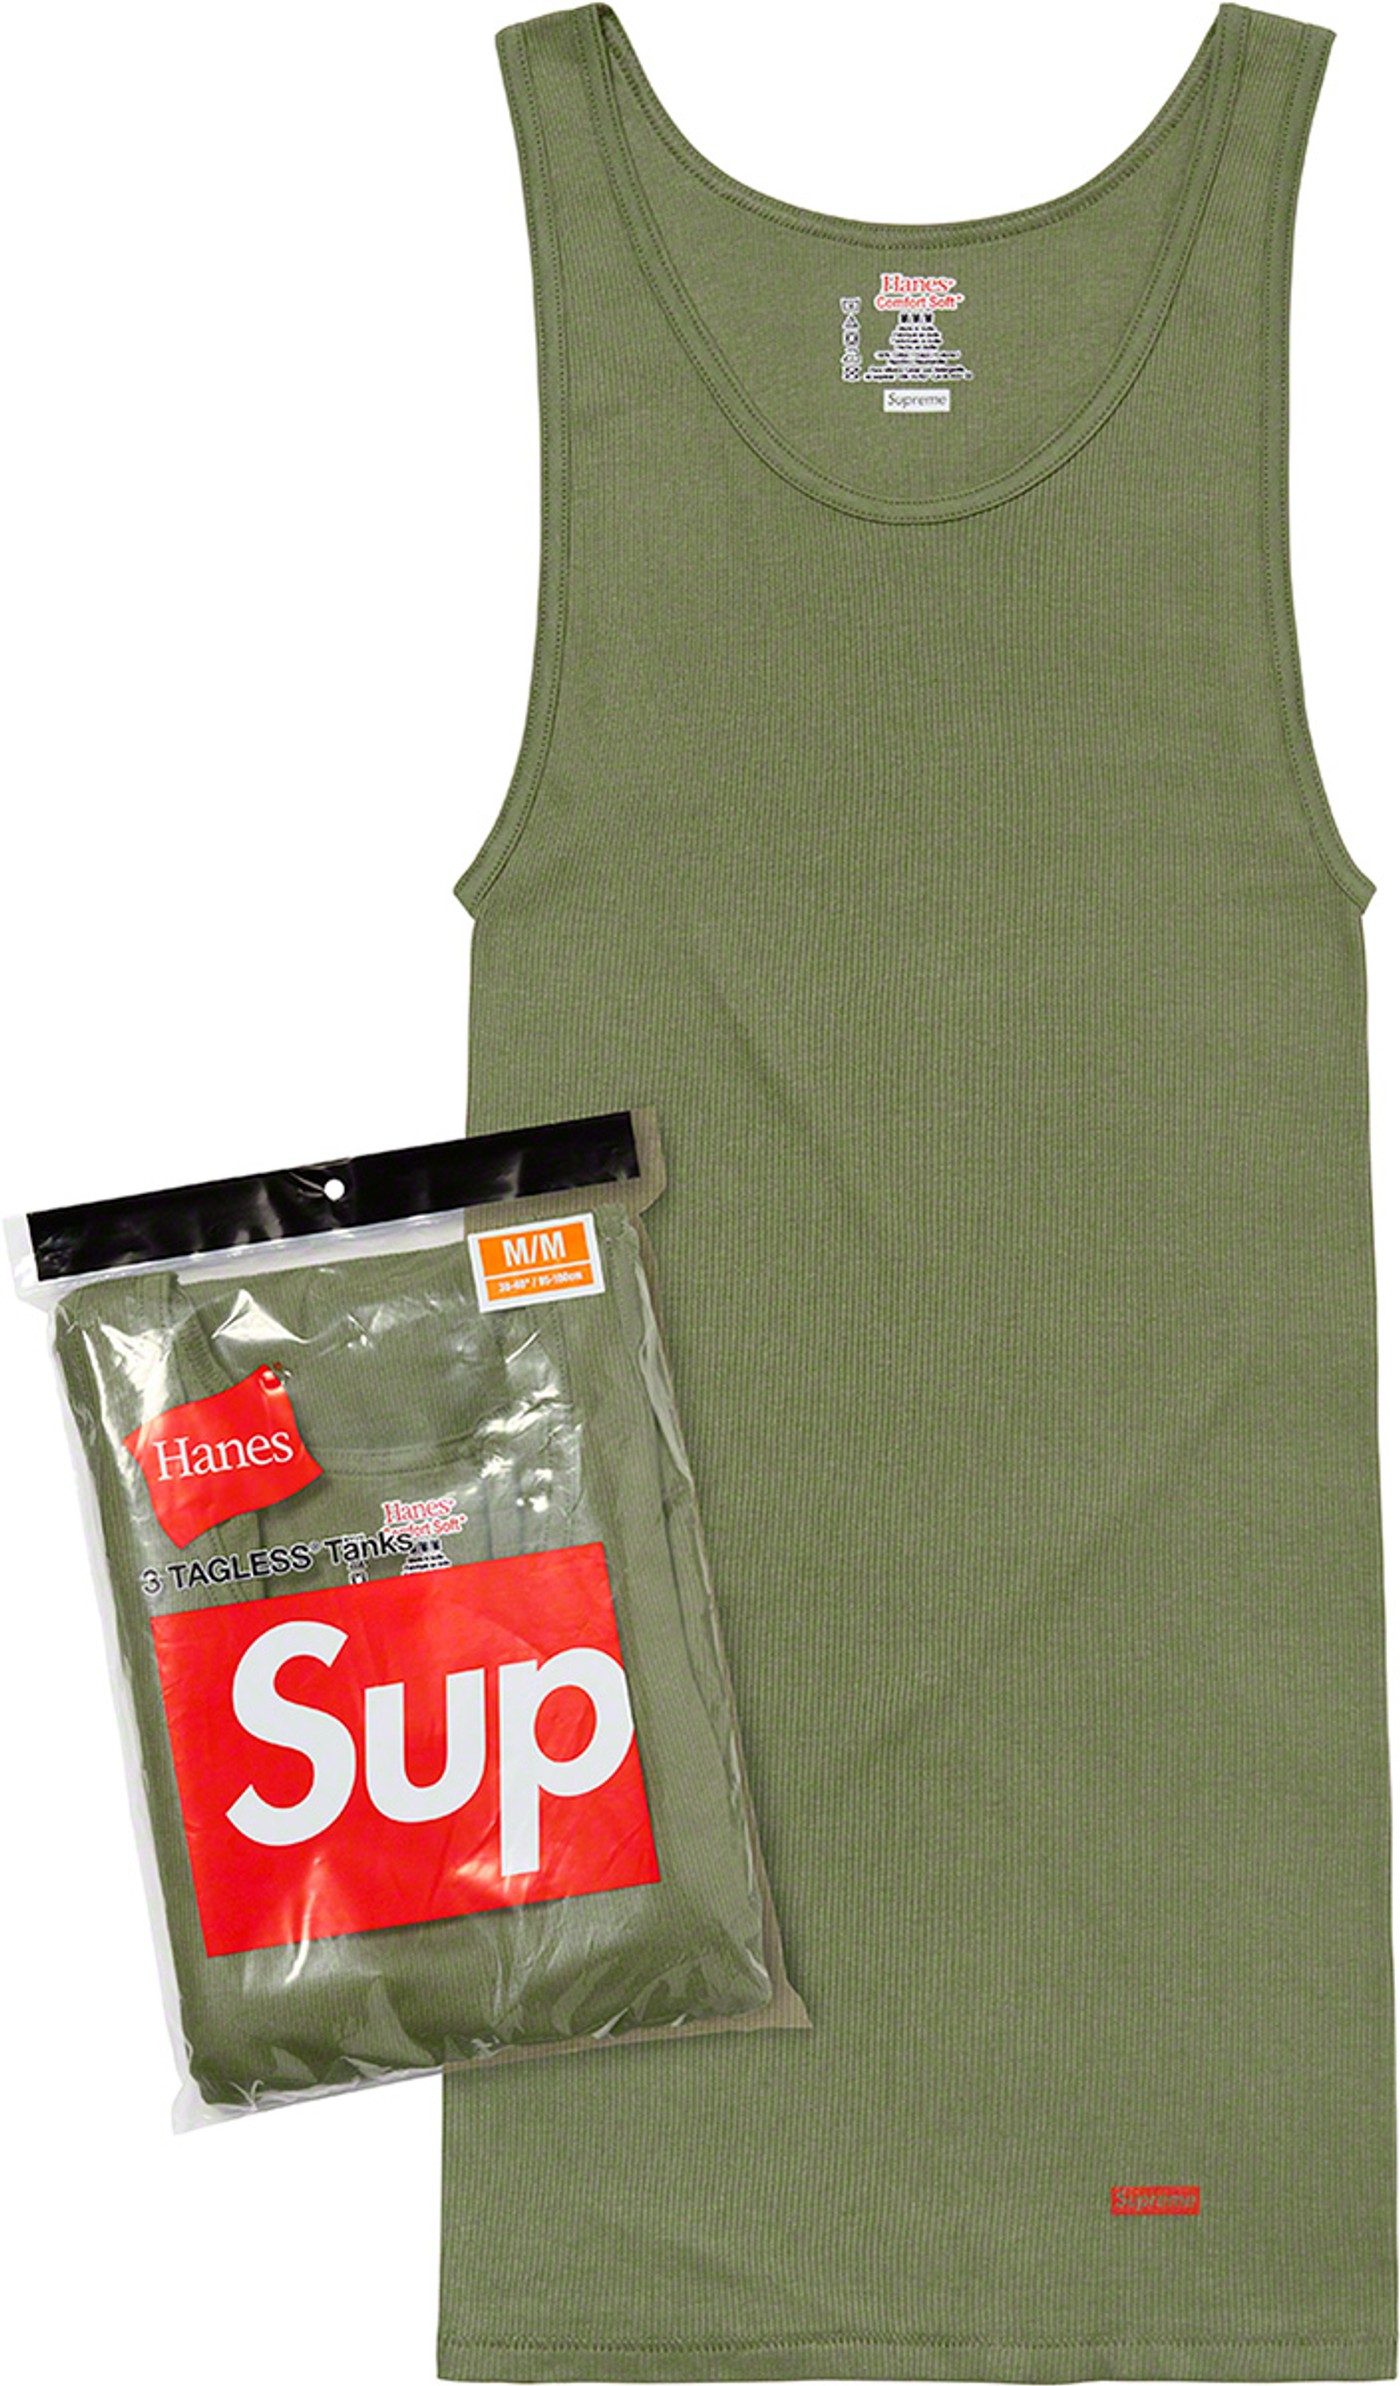 T-shirts and tank tops Supreme